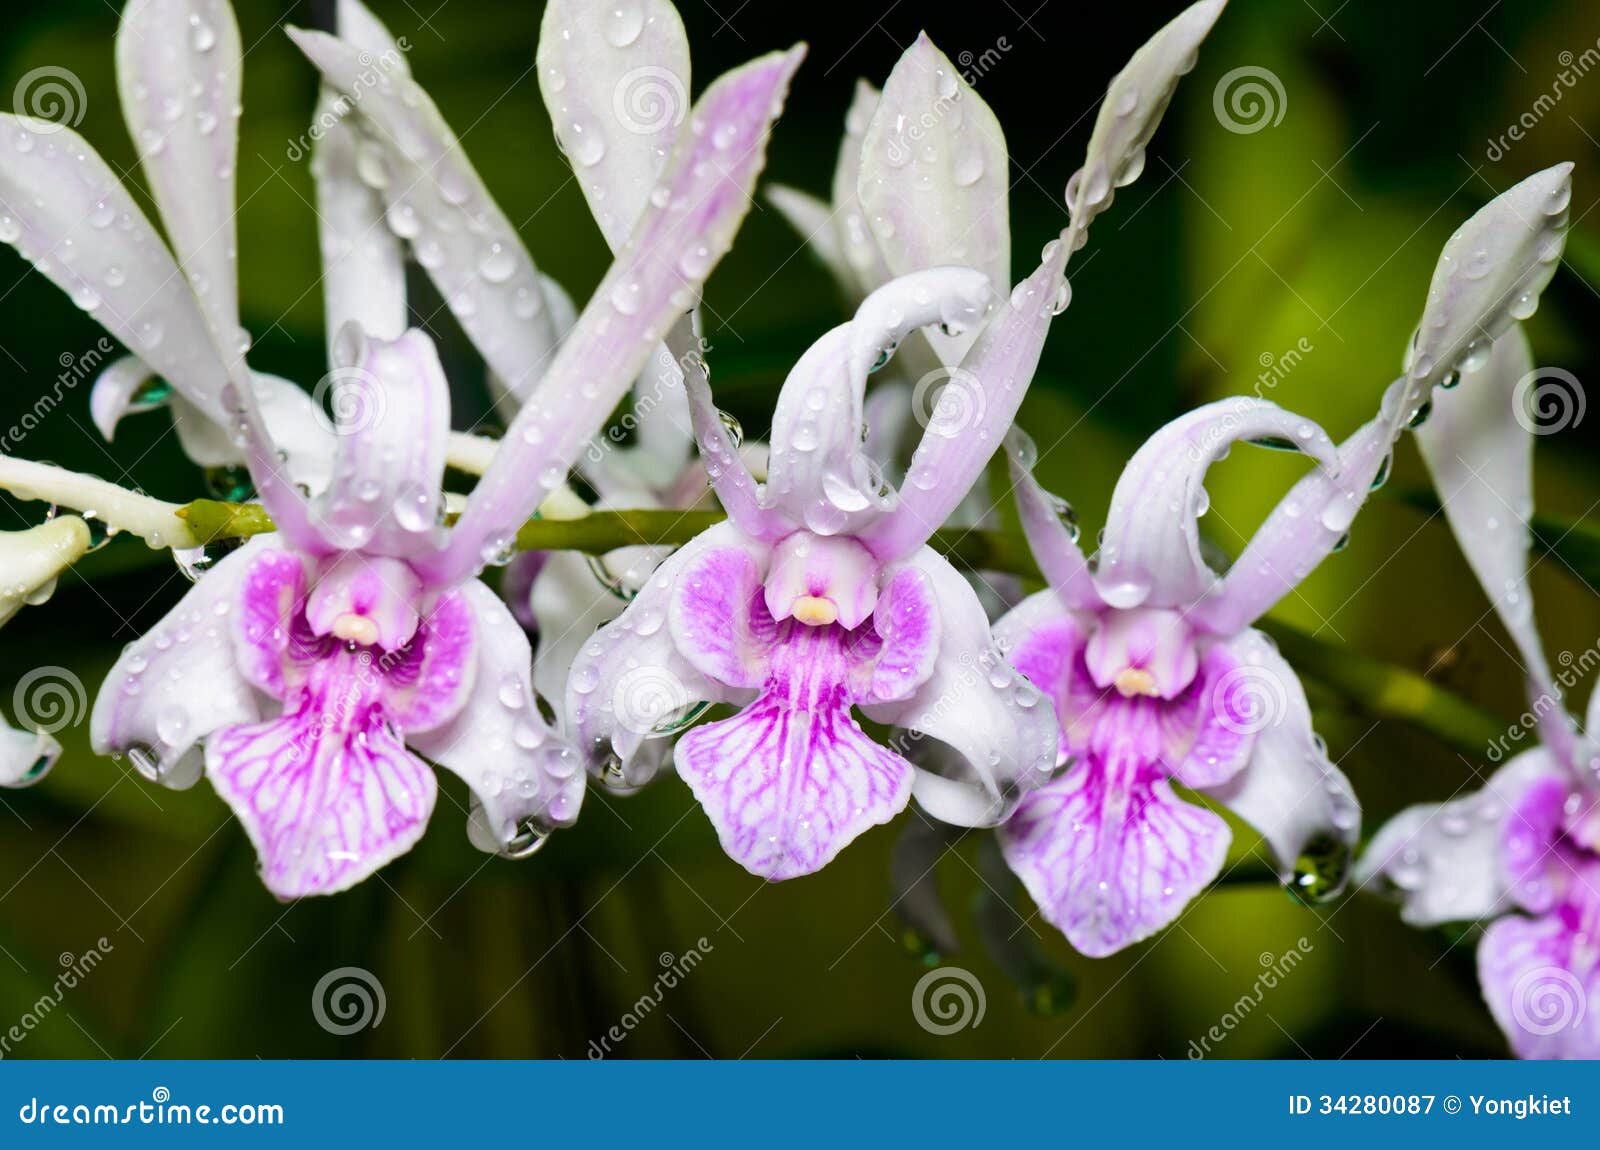 White Dendrobium Orchid